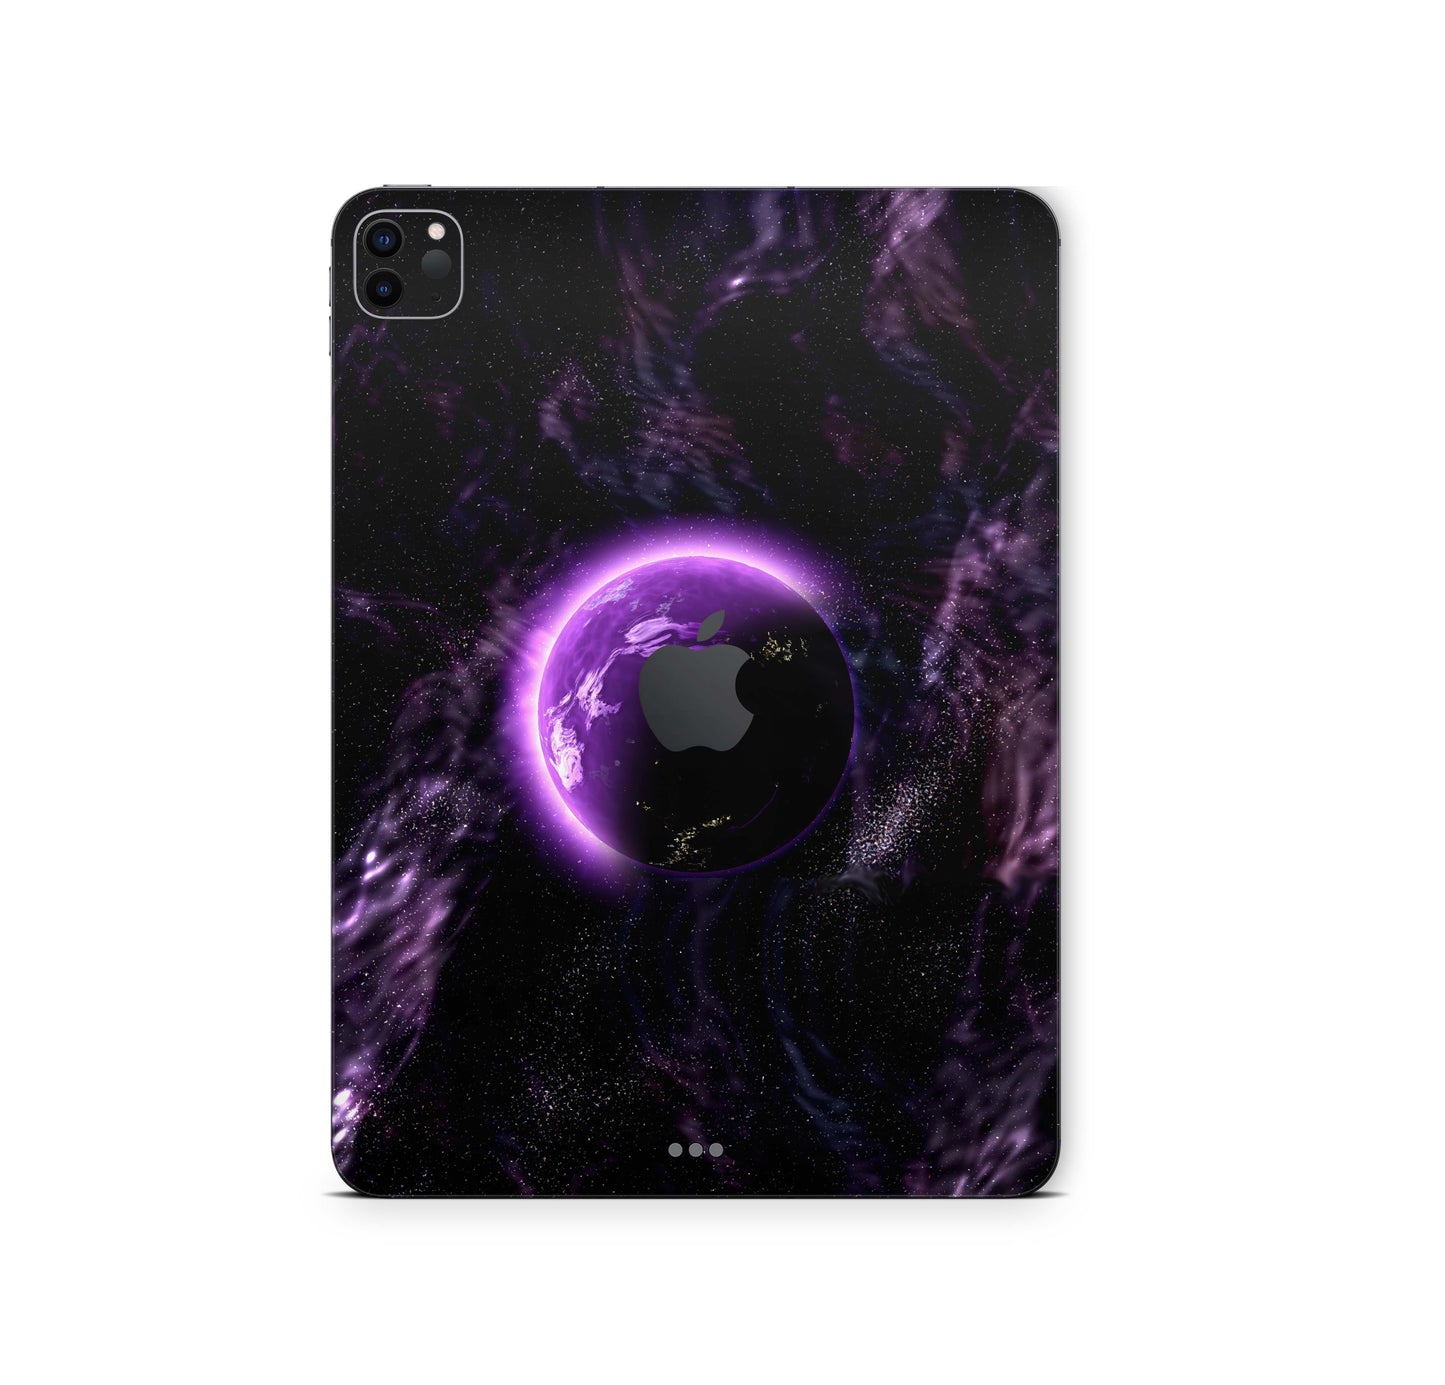 iPad Pro Skin 11" 3.Generation M1 2021 Design Cover Folie Vinyl Skins & Wraps Aufkleber Skins4u Purple-Space  